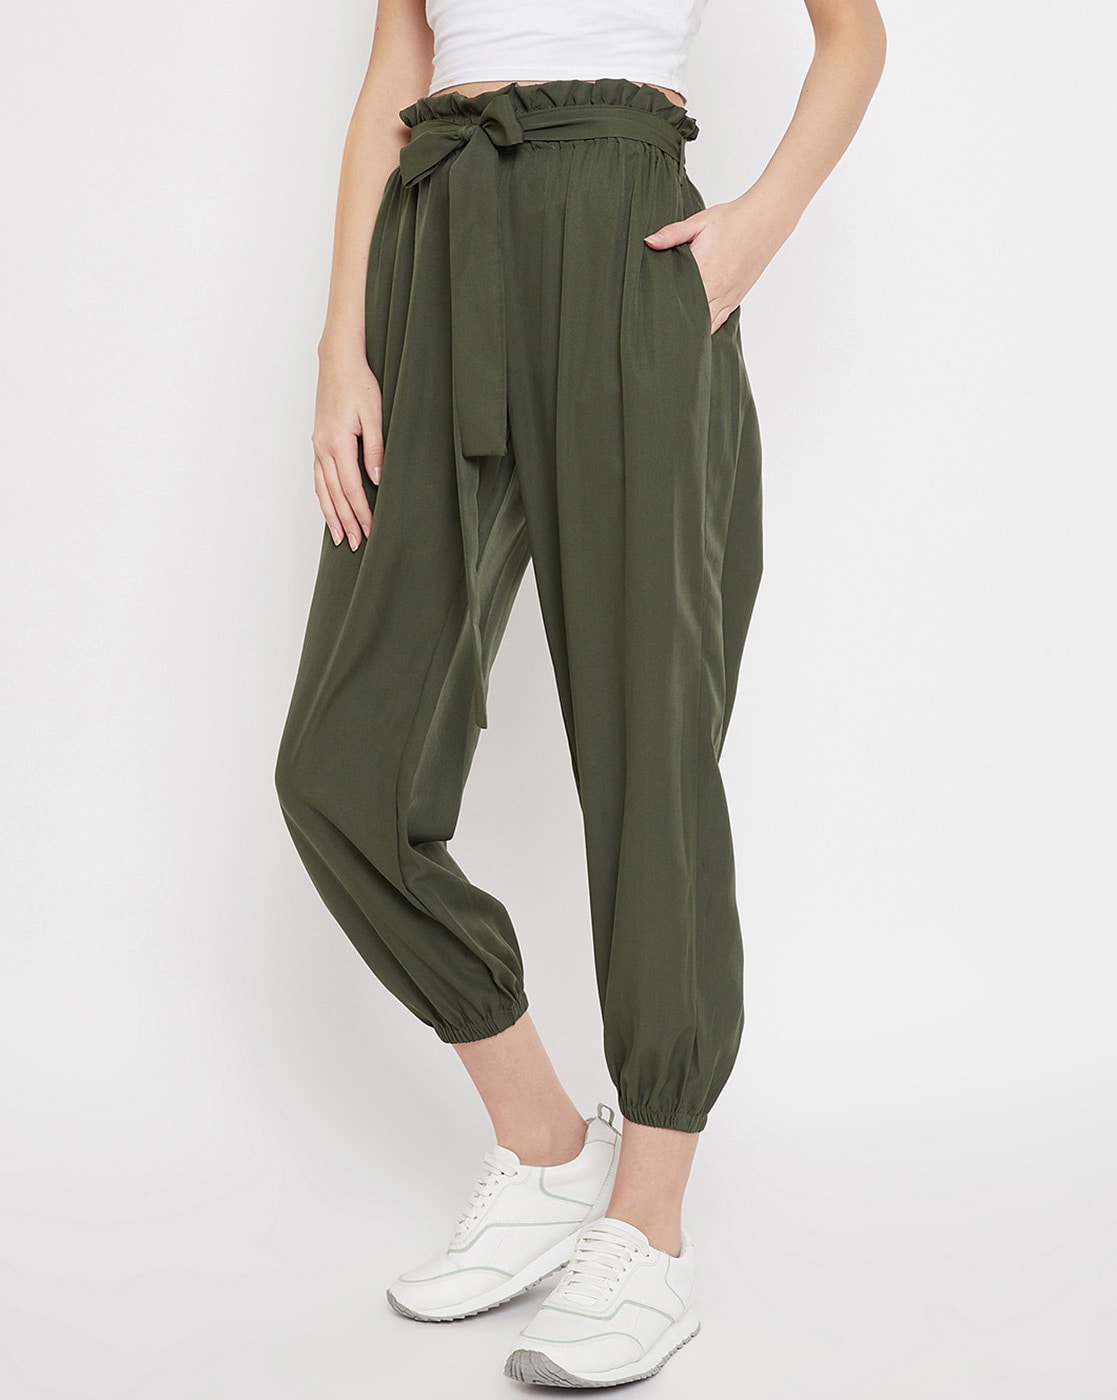 Women's Green Pants - Olive Green Jeans, Camo Pants & More | Levi's® US